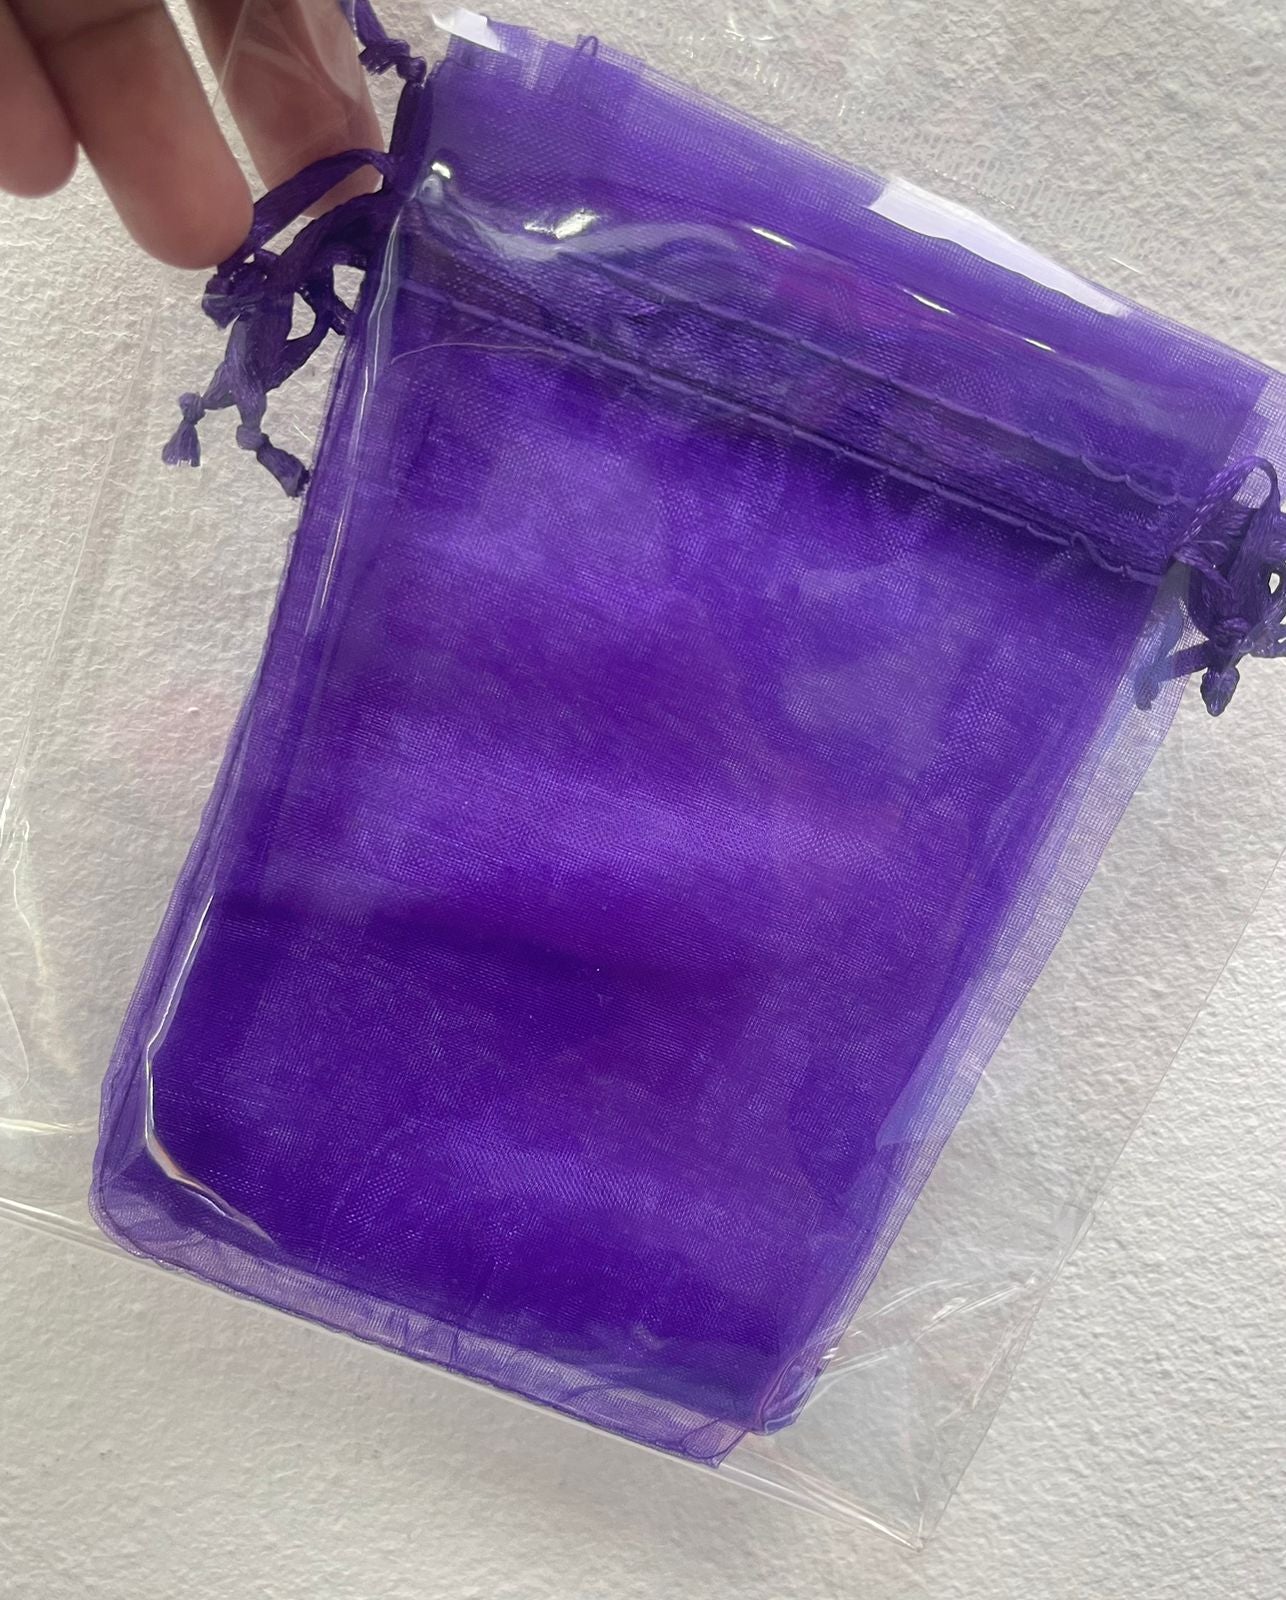 Bolsa de Lavado de Jabón (Soap Wash Bag) 5 unidades